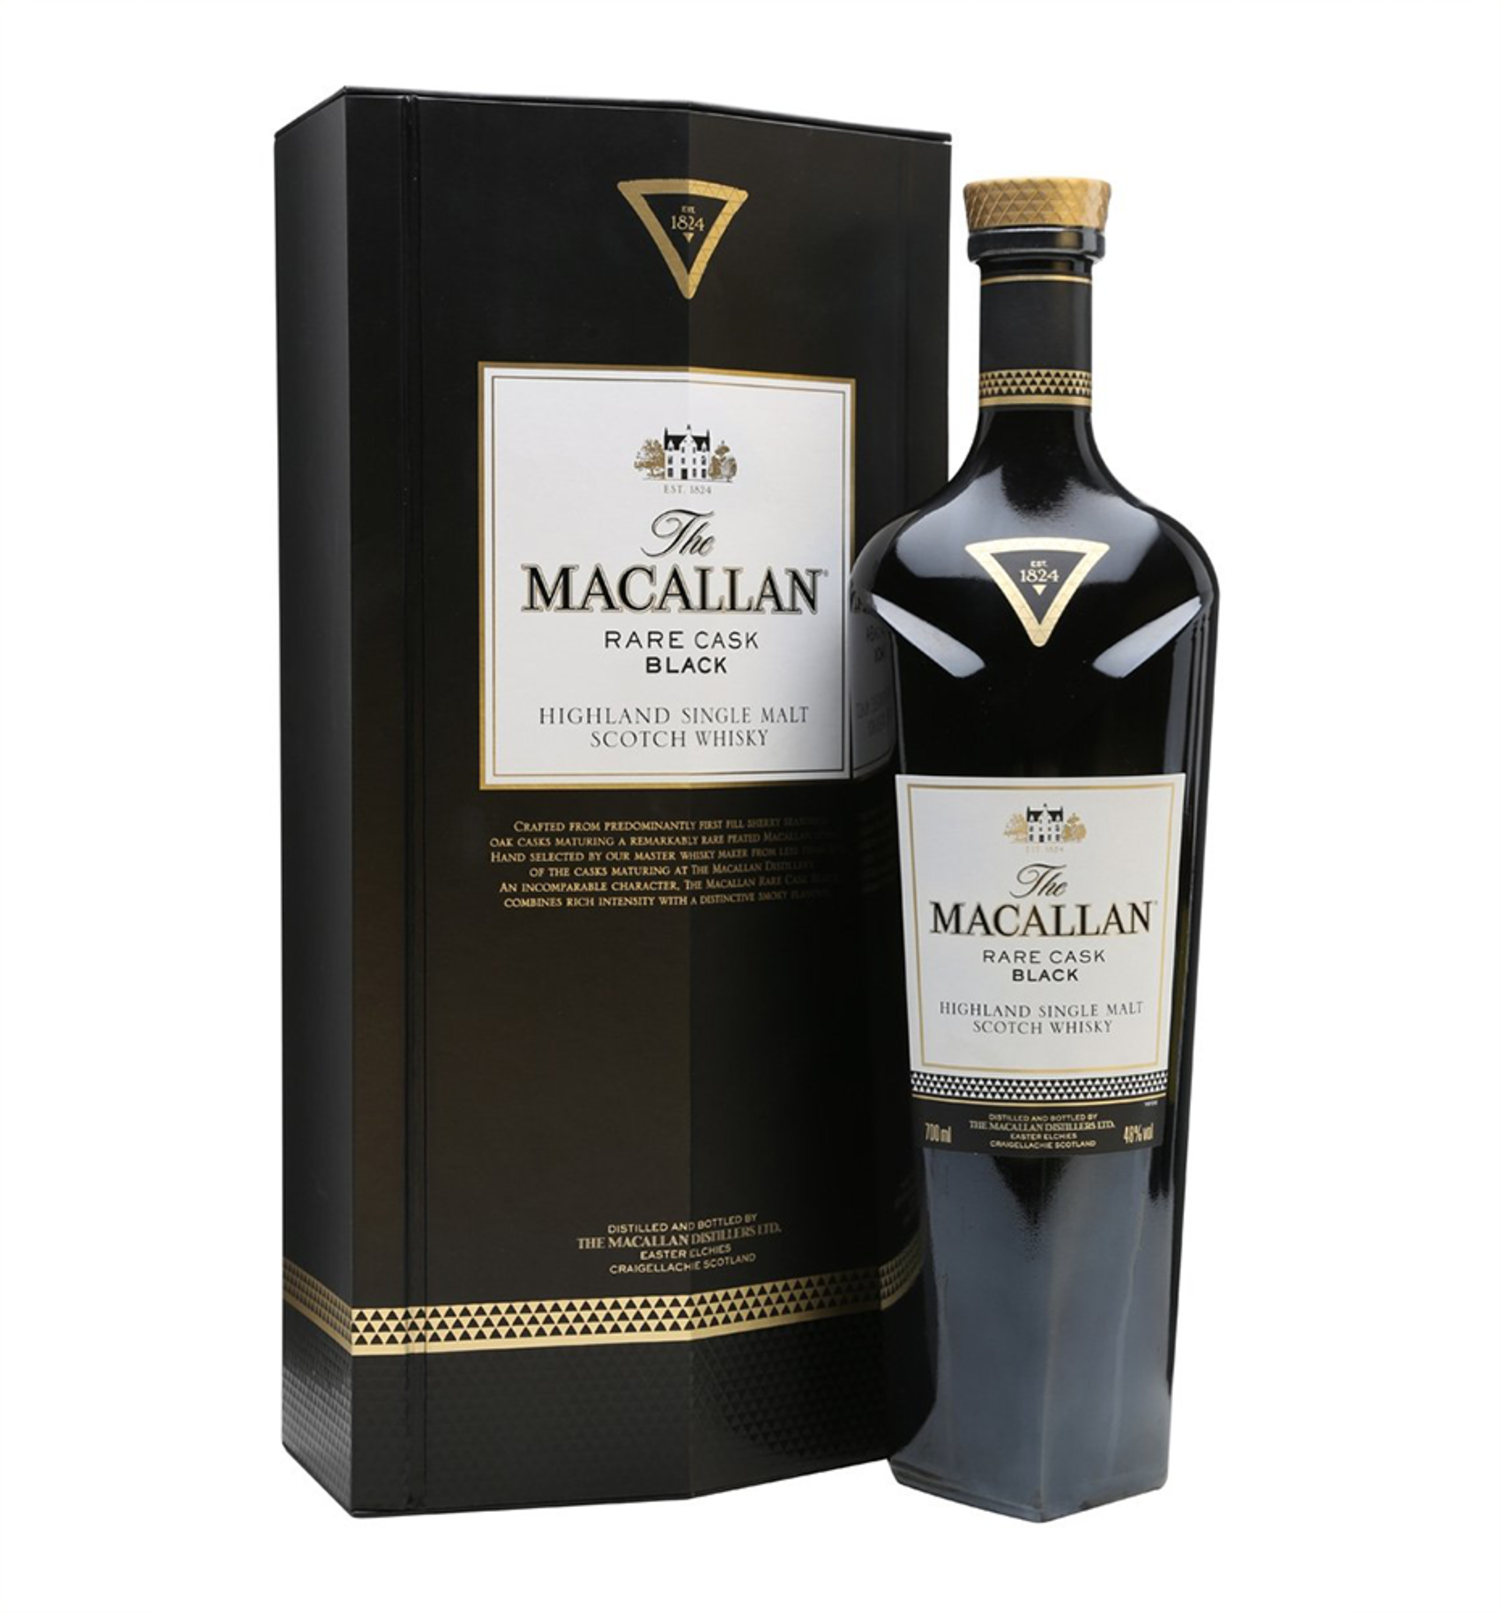 The Macallan Rare Cask Black Single Malt Scotch Whisky 700ml $955